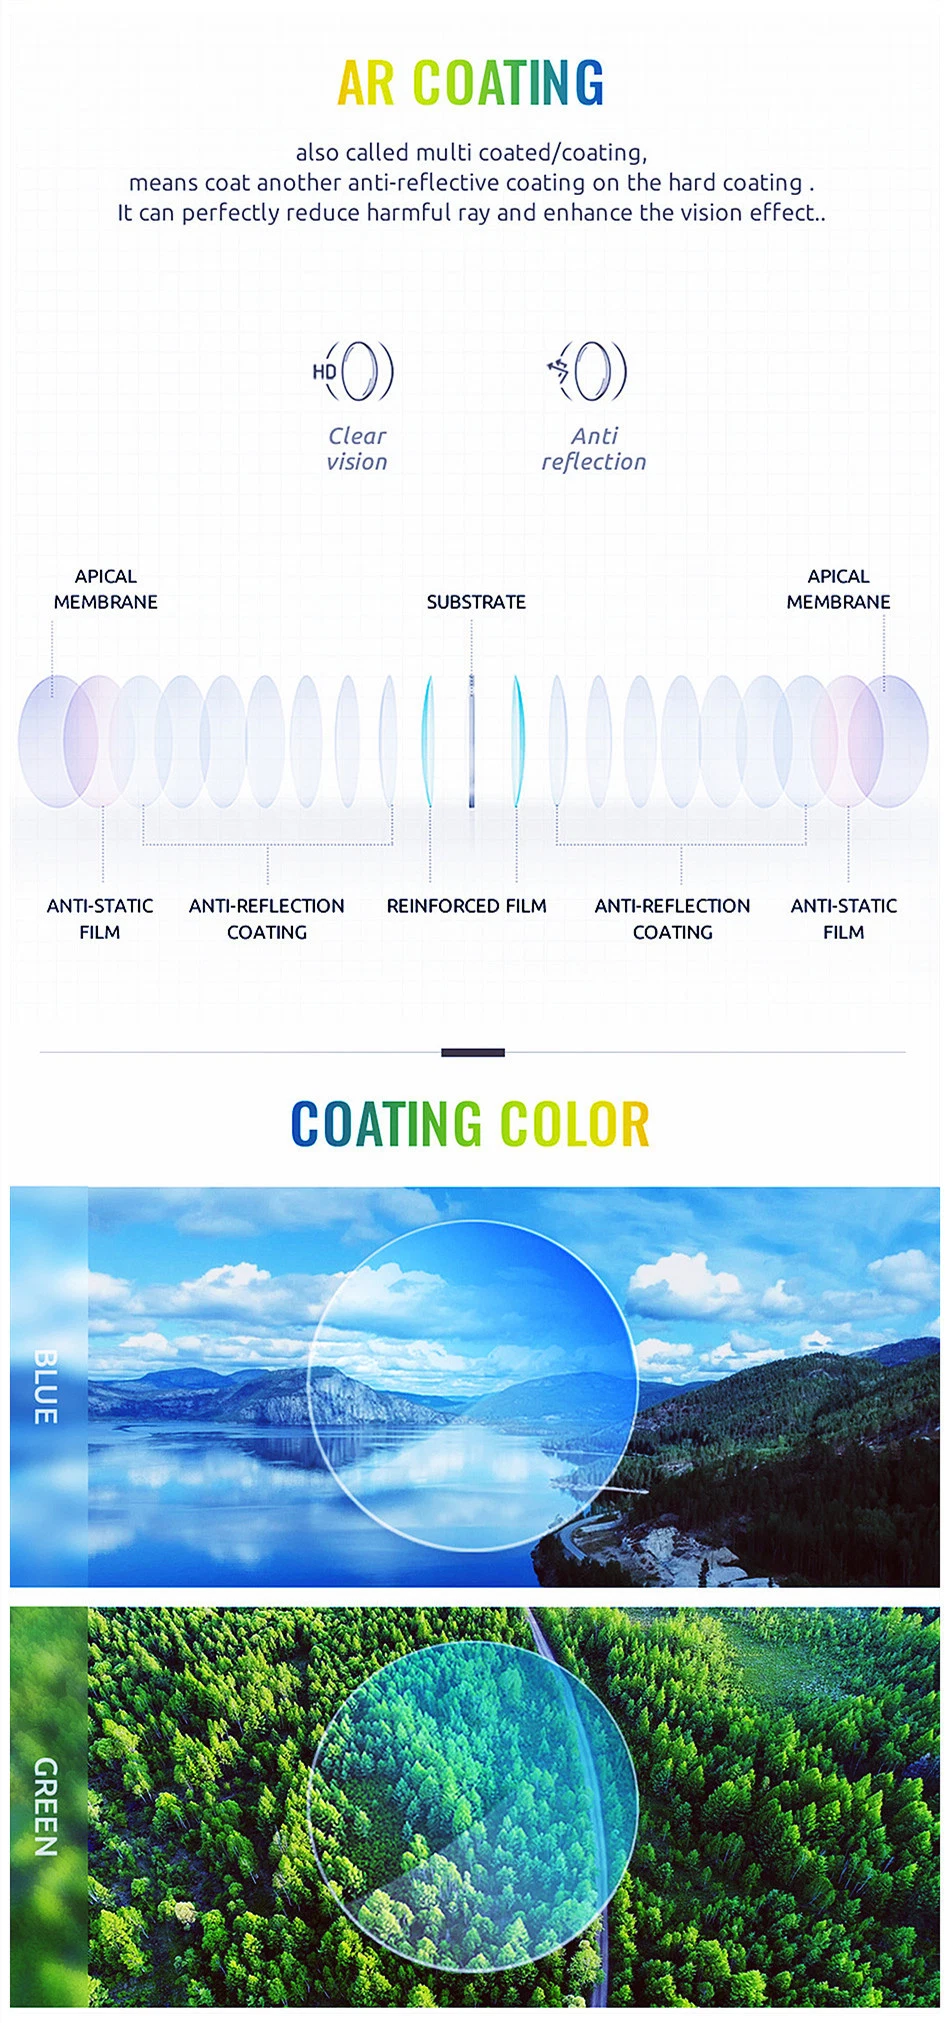 Ophthalmic Lens Manufacturers 1.56 Blue Cut UV420 Spin Photochromic Progressive Prescription Lens